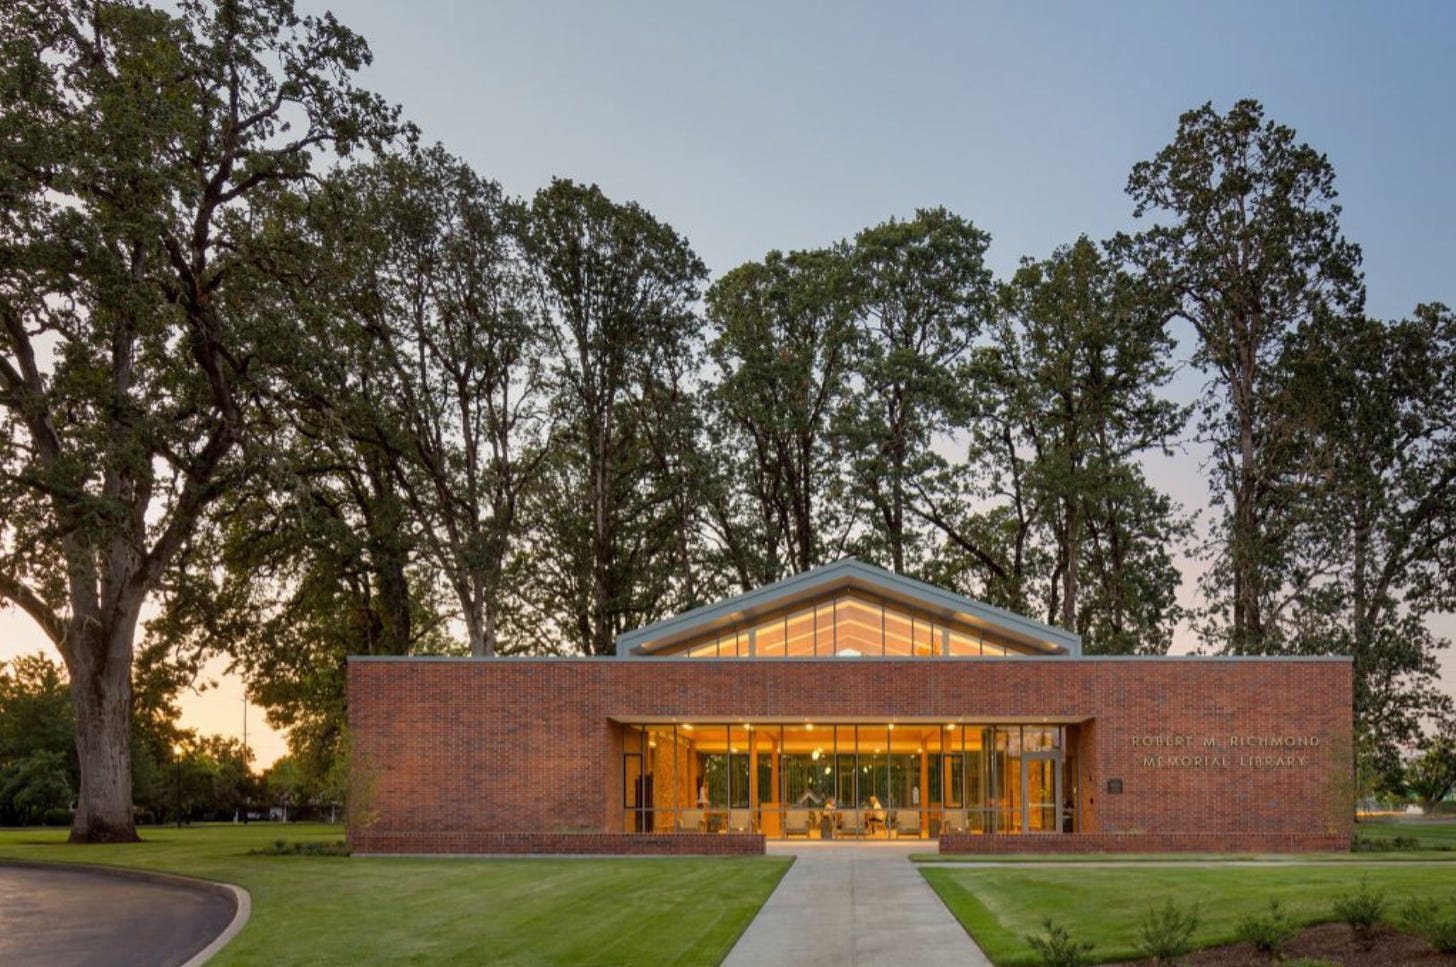 Robert M Richmond Memorial Library, Forest Grove, Oregon